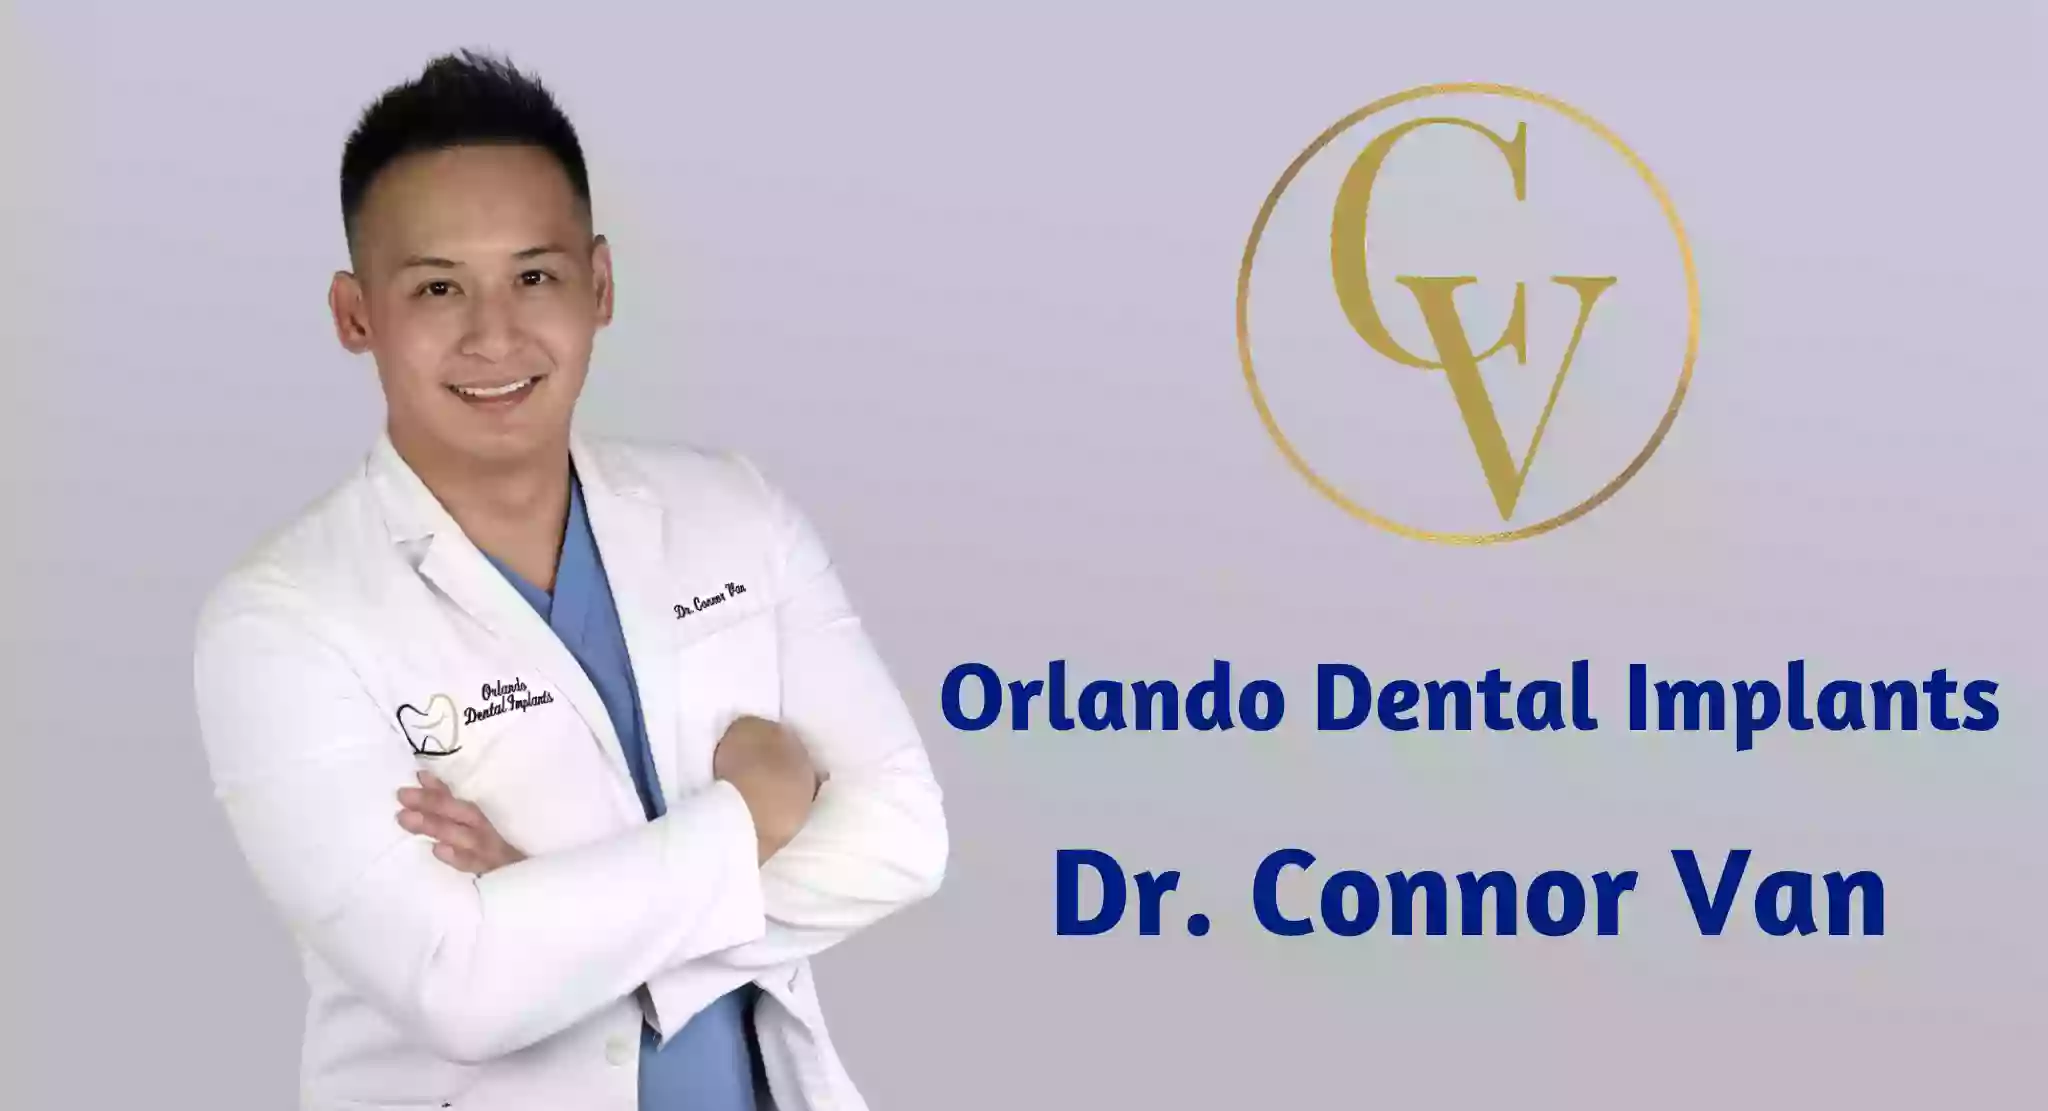 Orlando Dental Implants